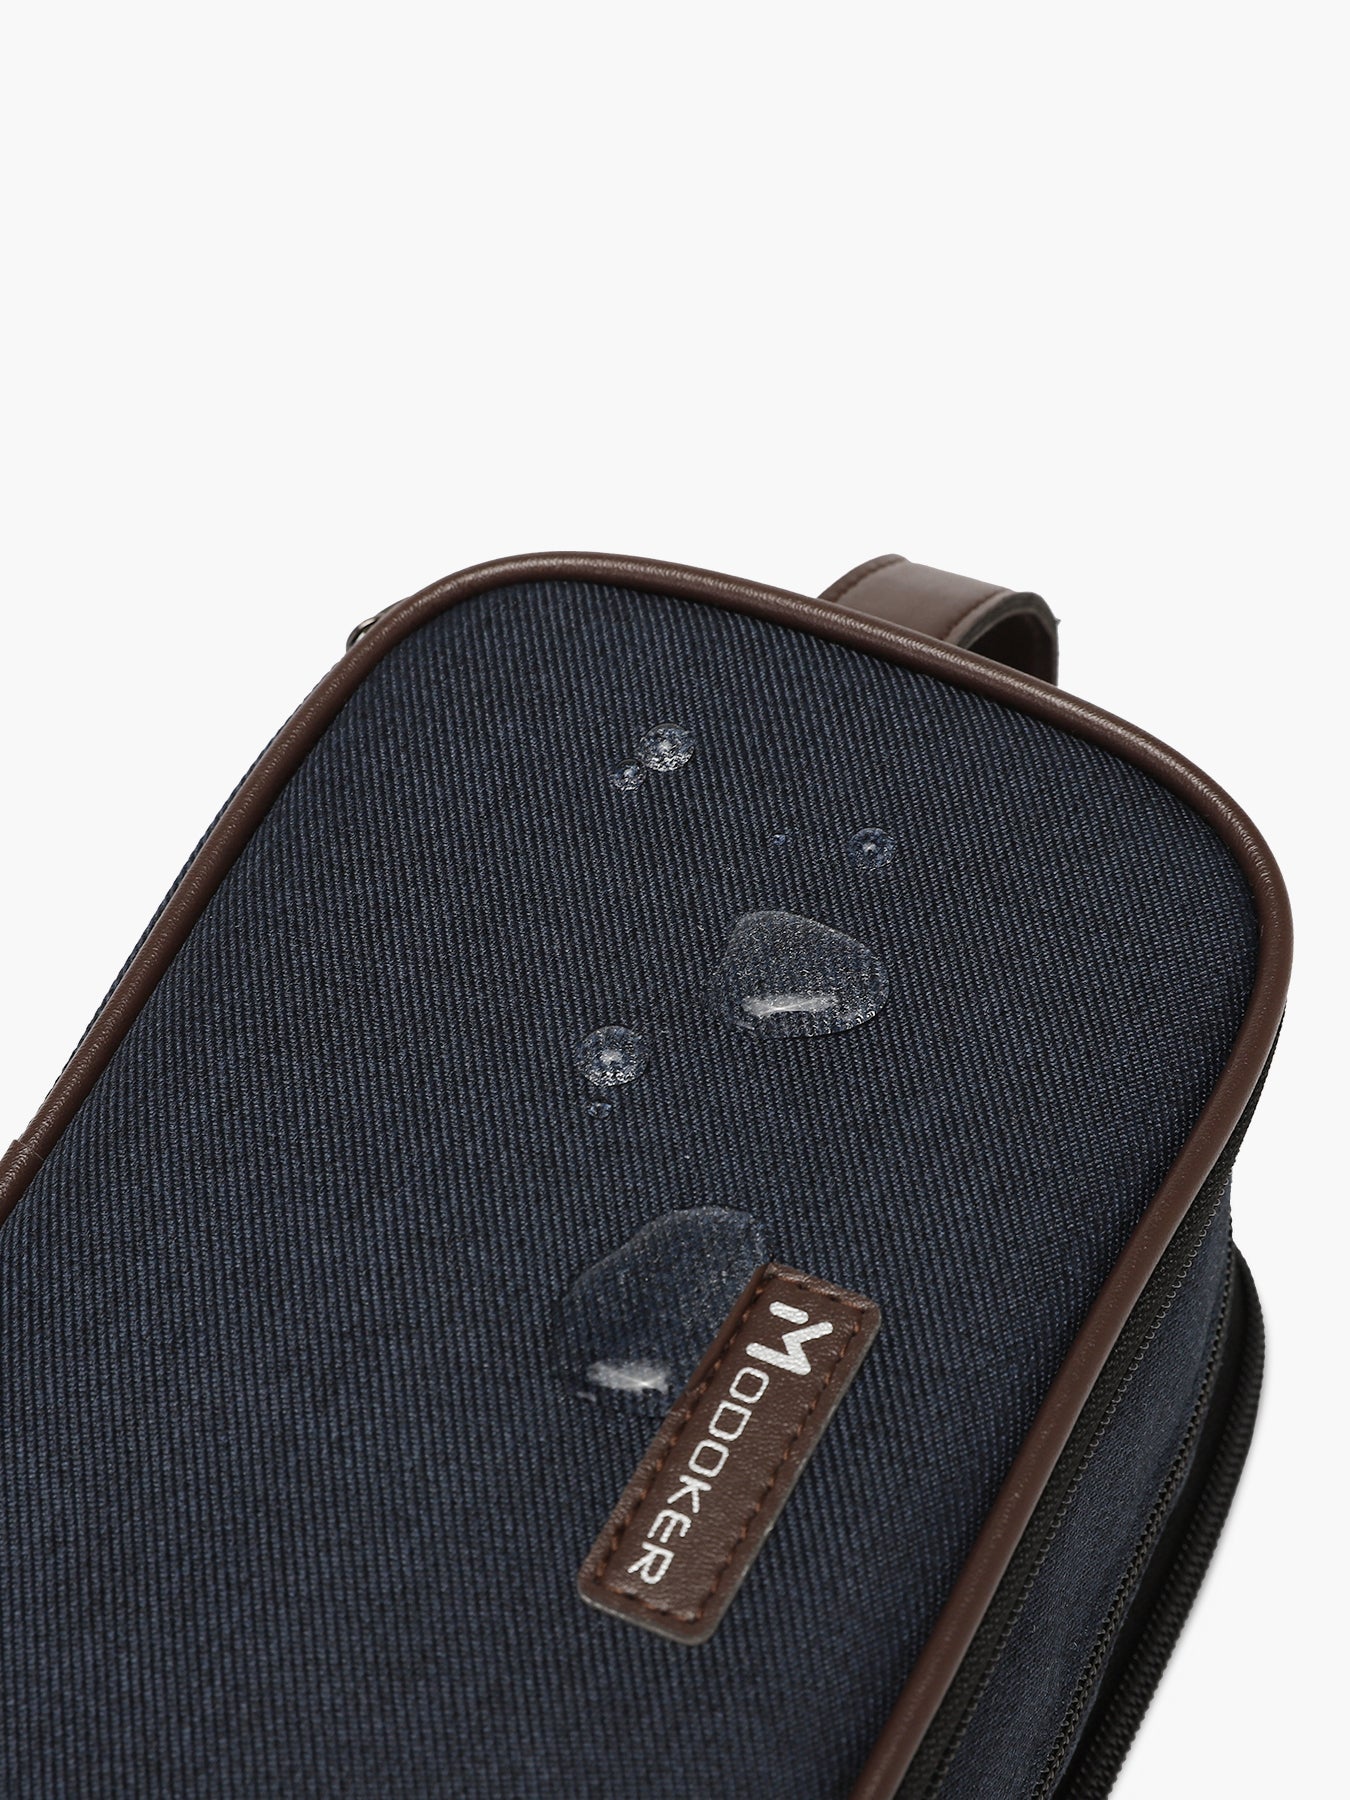 Travel Toiletries Dopp Kit Water-resistant Shaving Bag for Accessories Easy Organization